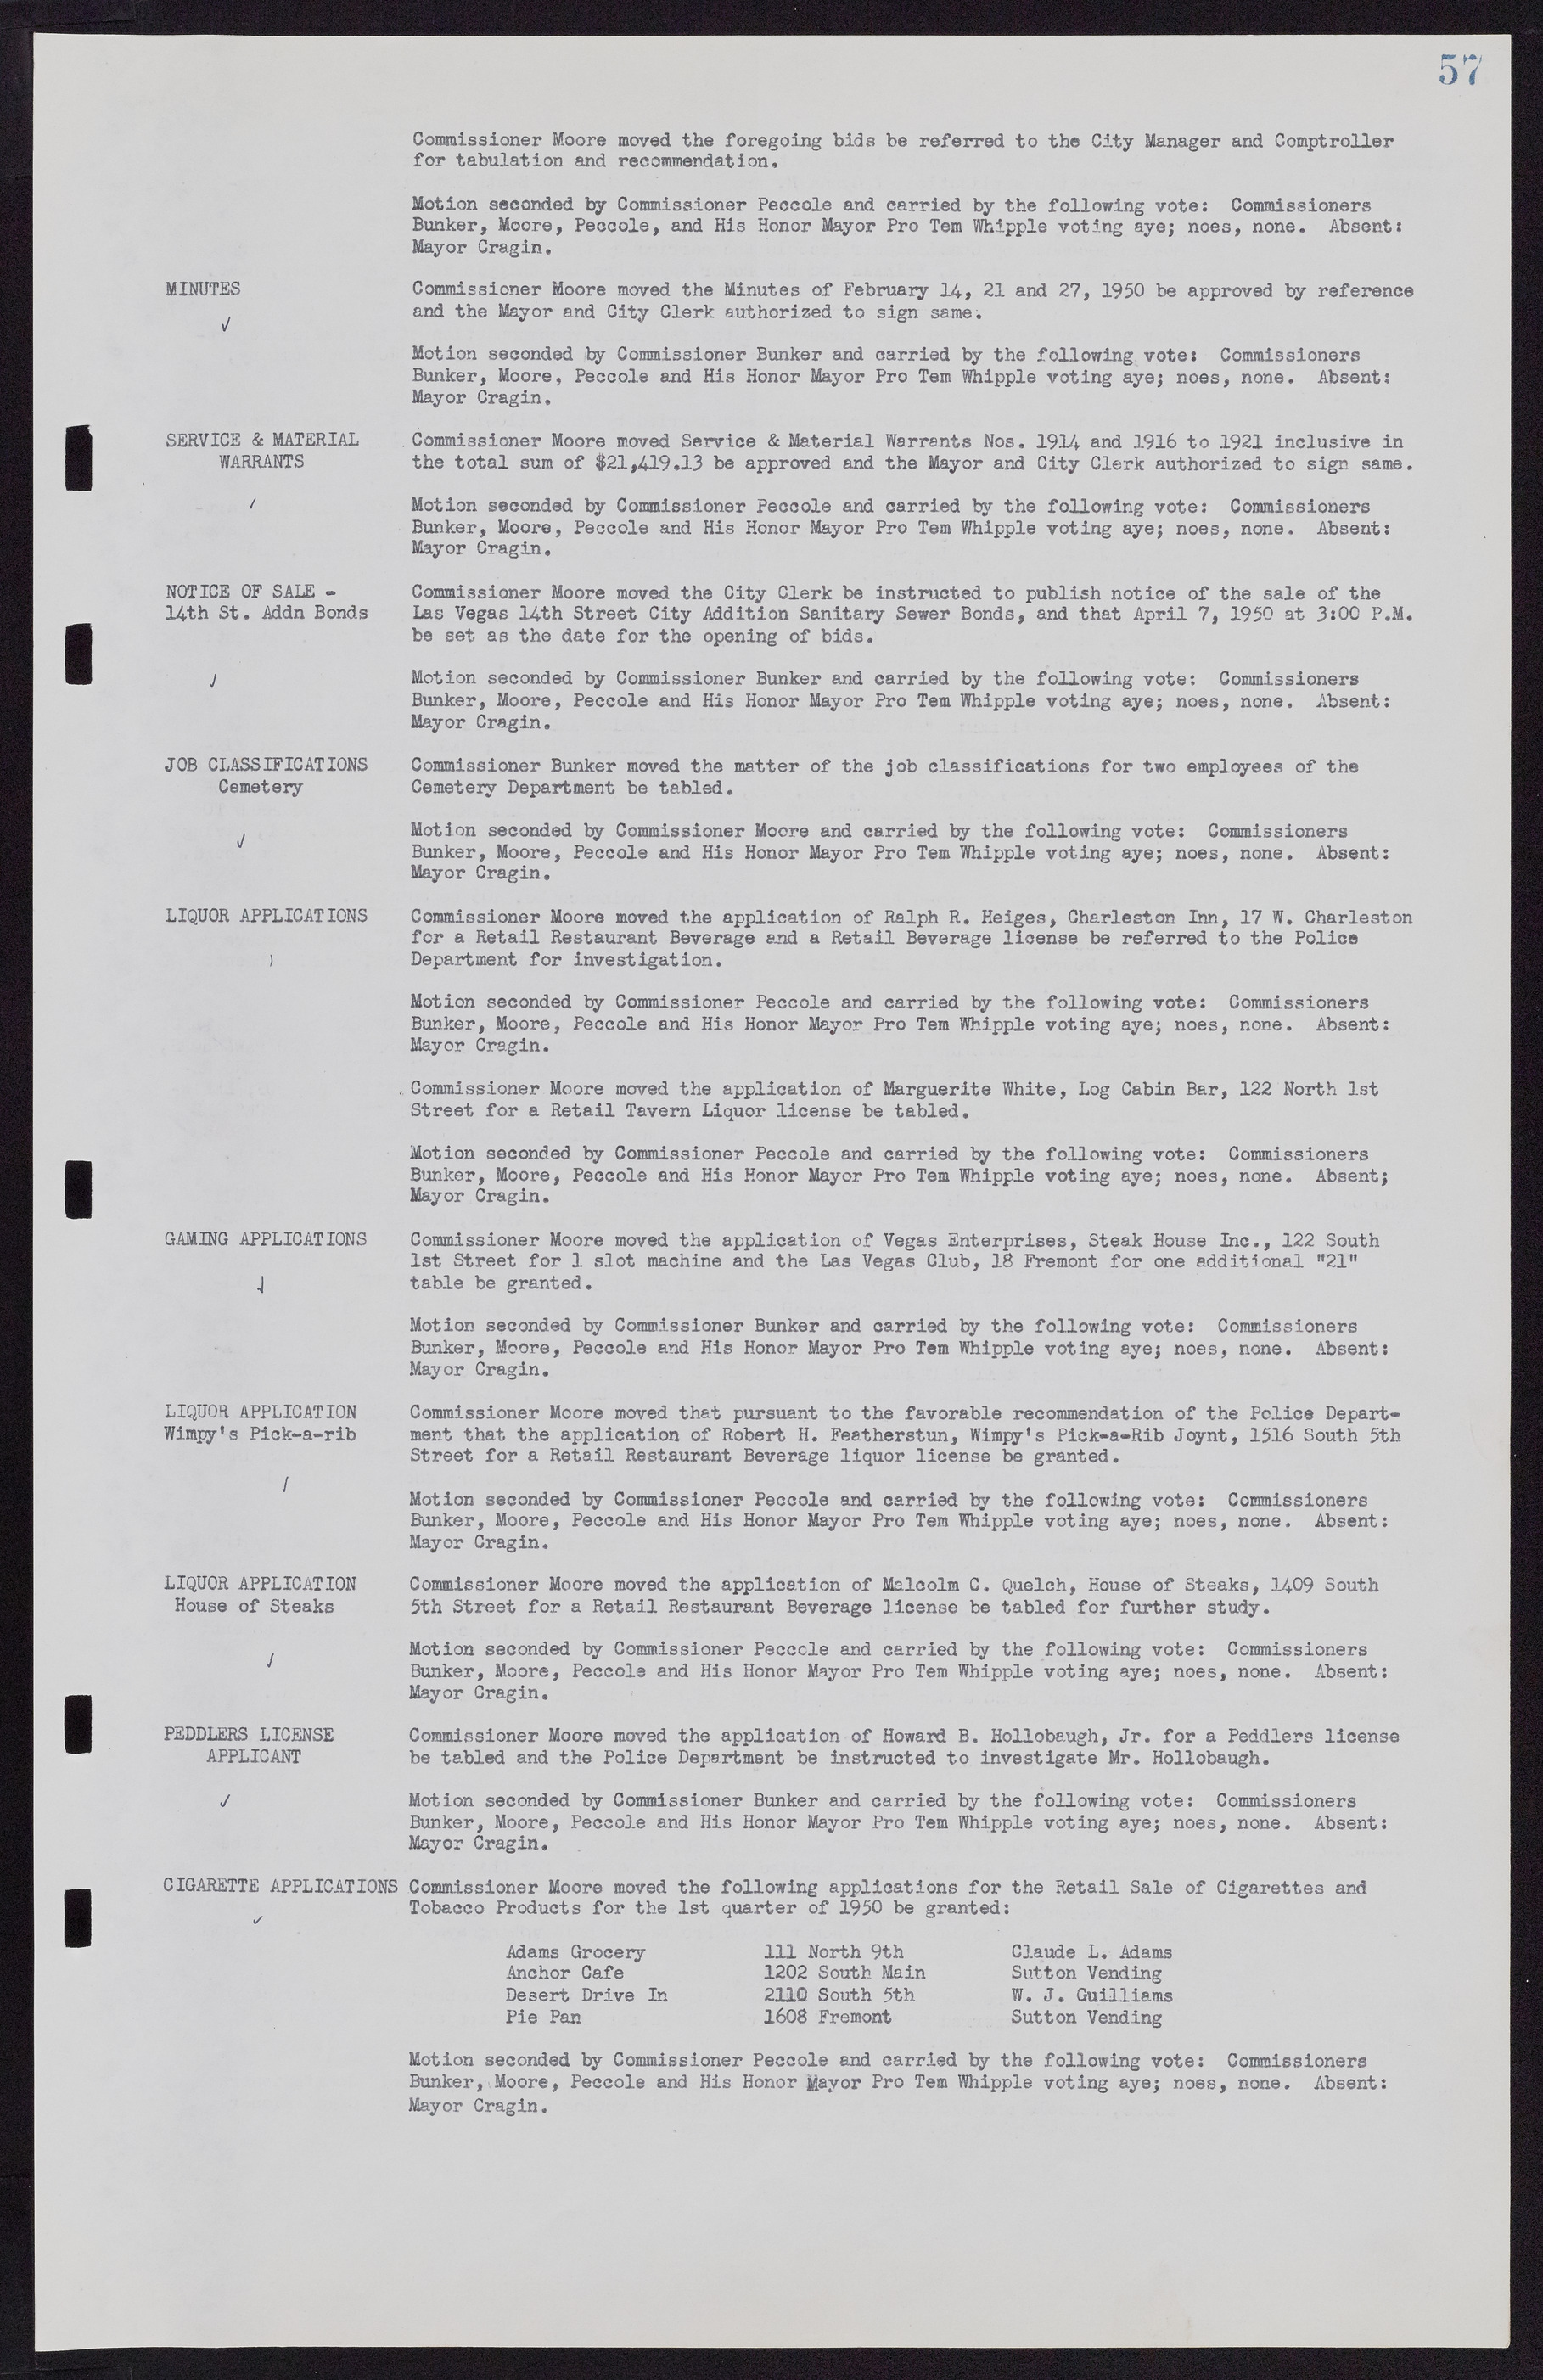 Las Vegas City Commission Minutes, November 7, 1949 to May 21, 1952, lvc000007-65